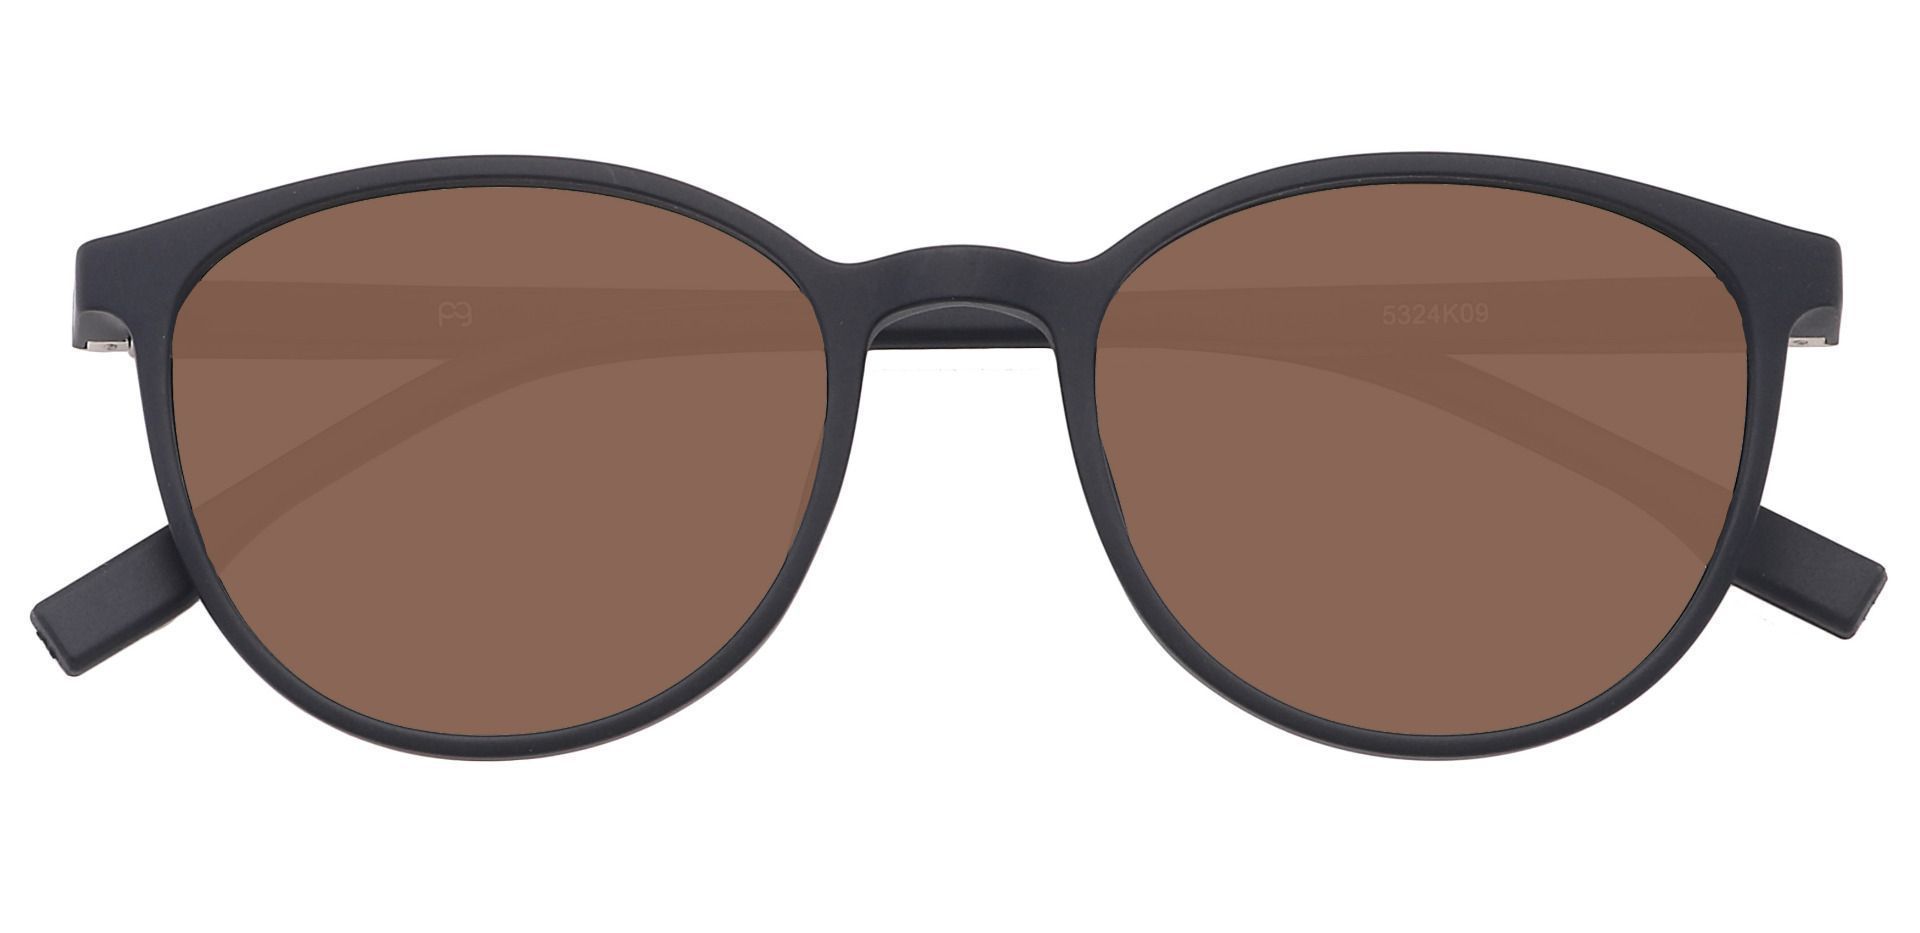 Bay Round Prescription Sunglasses - Black Frame With Brown Lenses